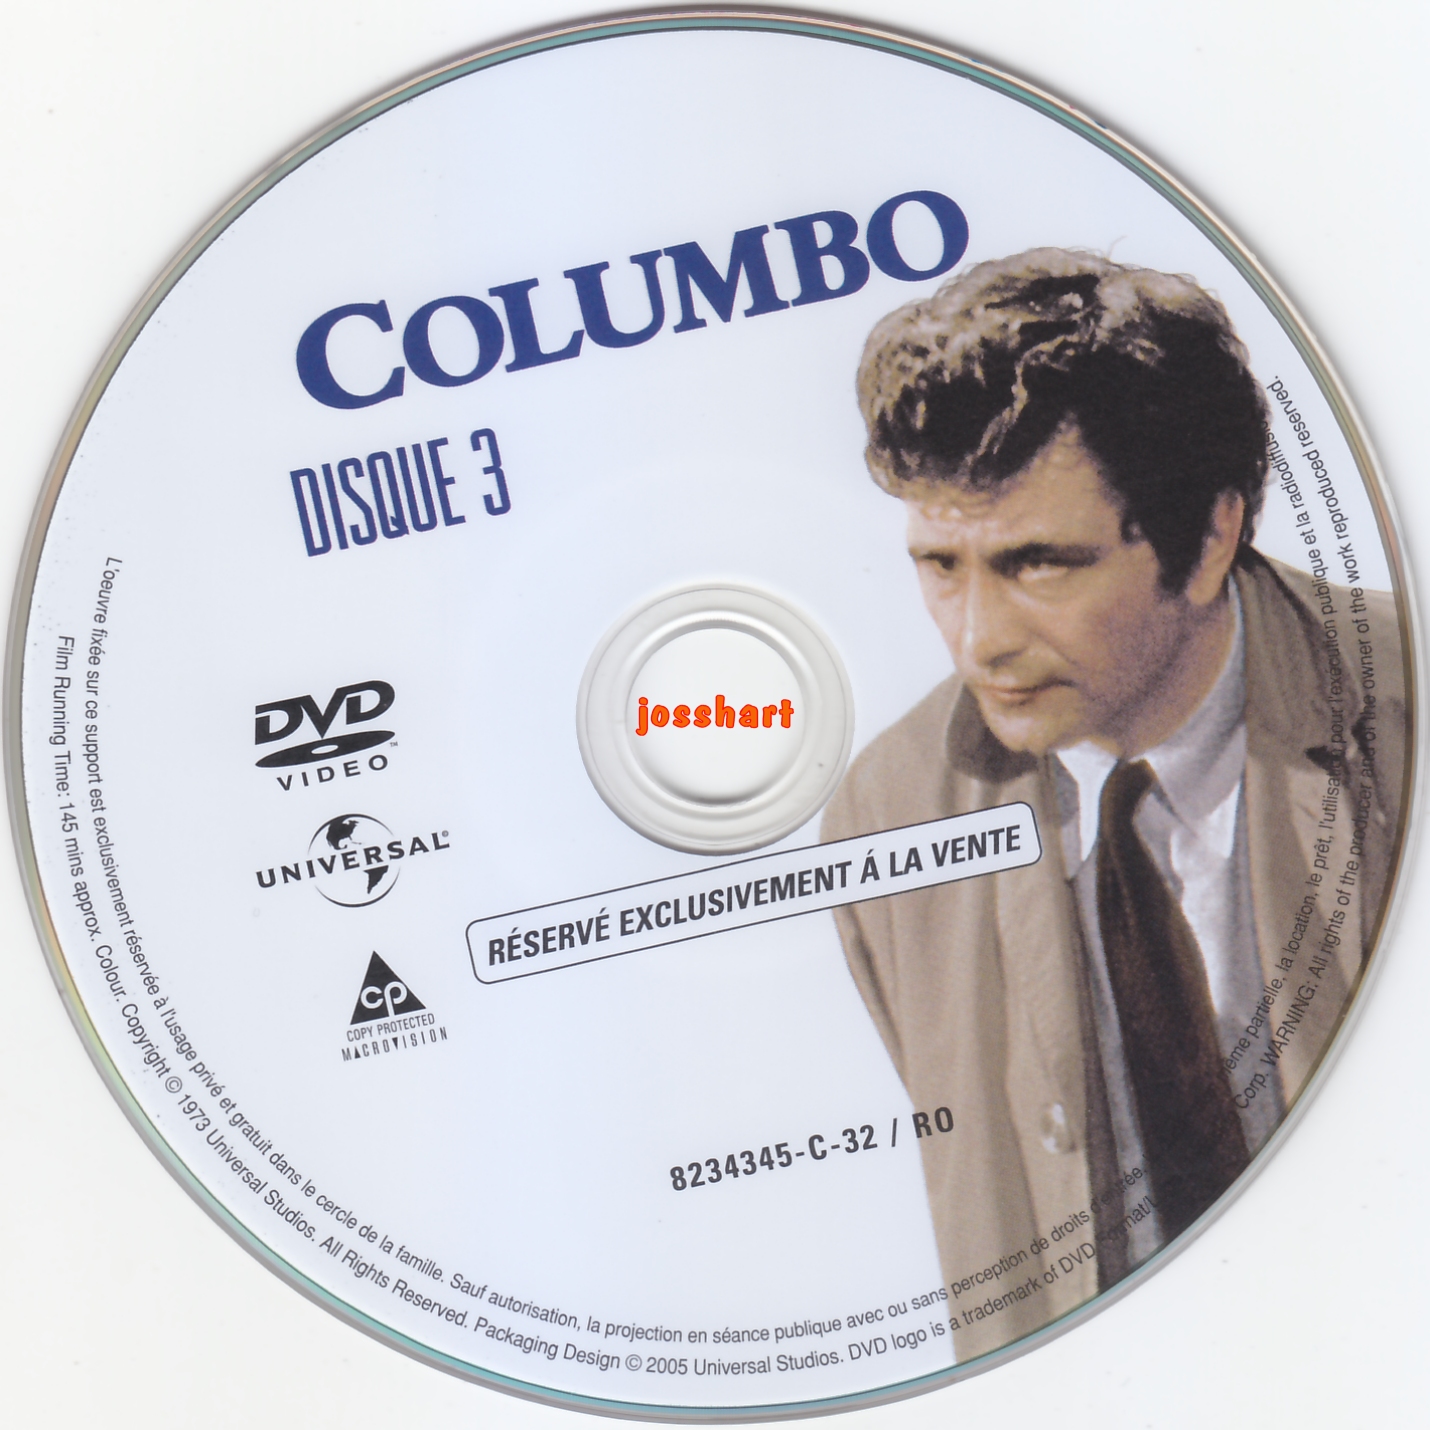 Columbo S2 DISC3